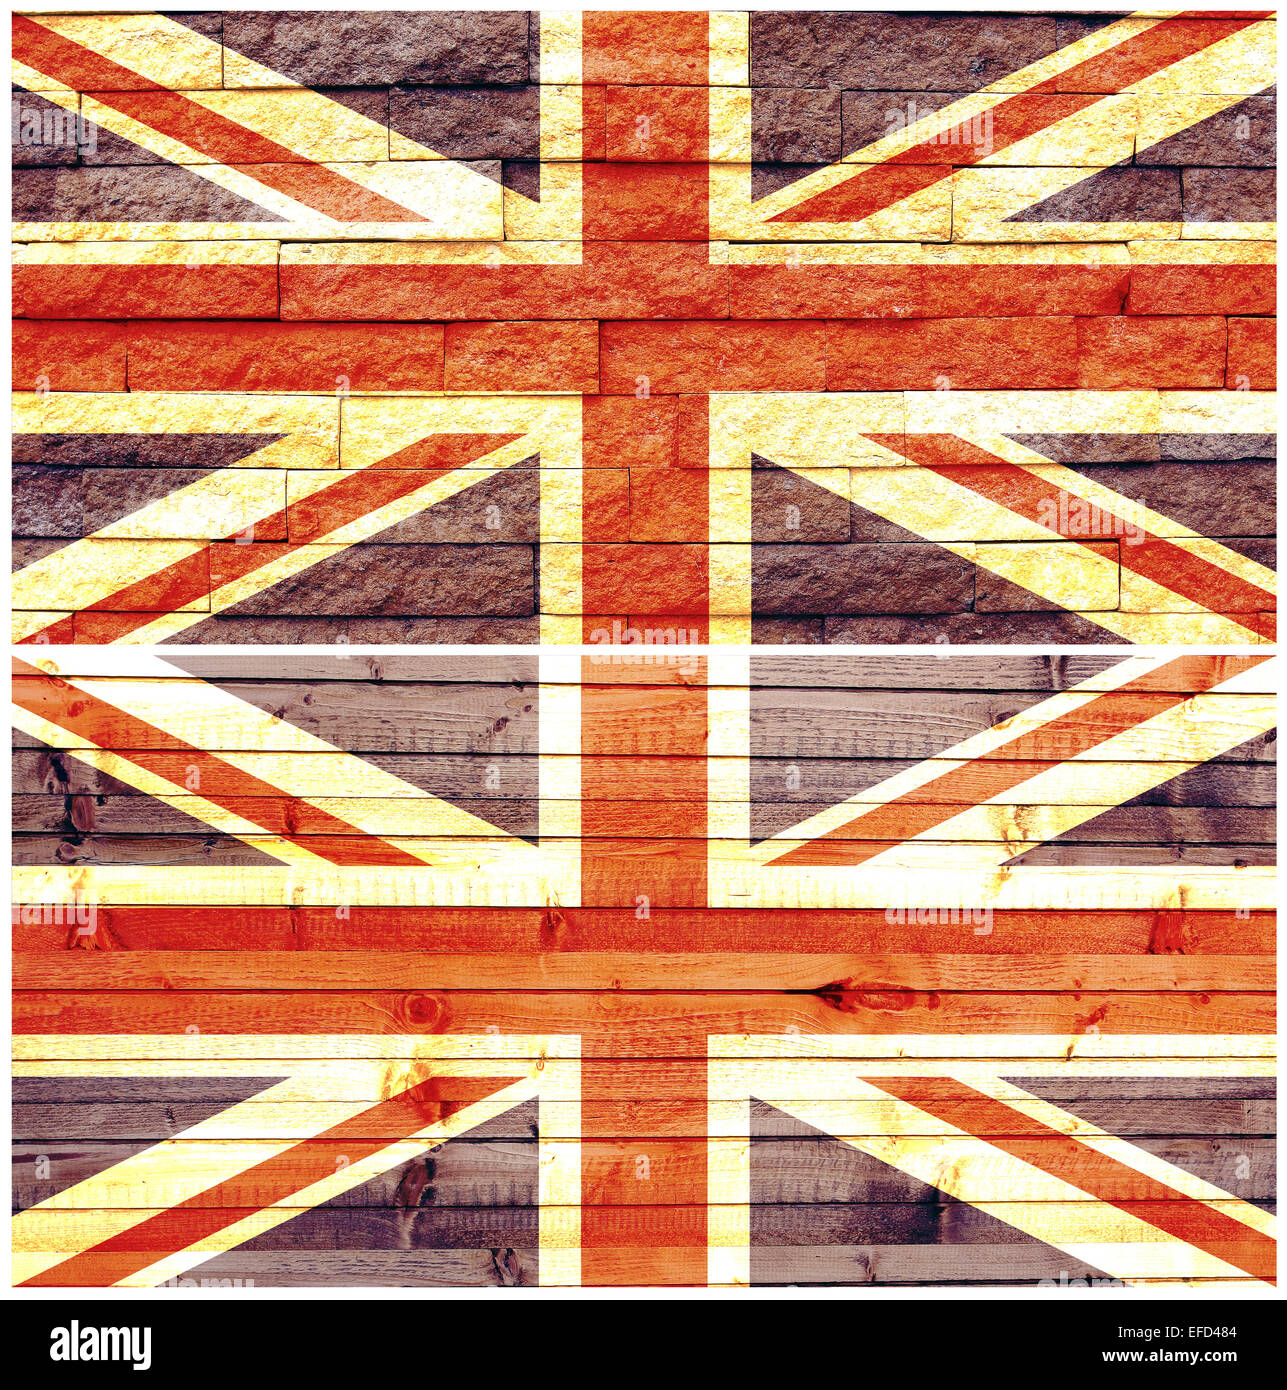 Vintage wall flag of United Kingdom collage Stock Photo - Alamy